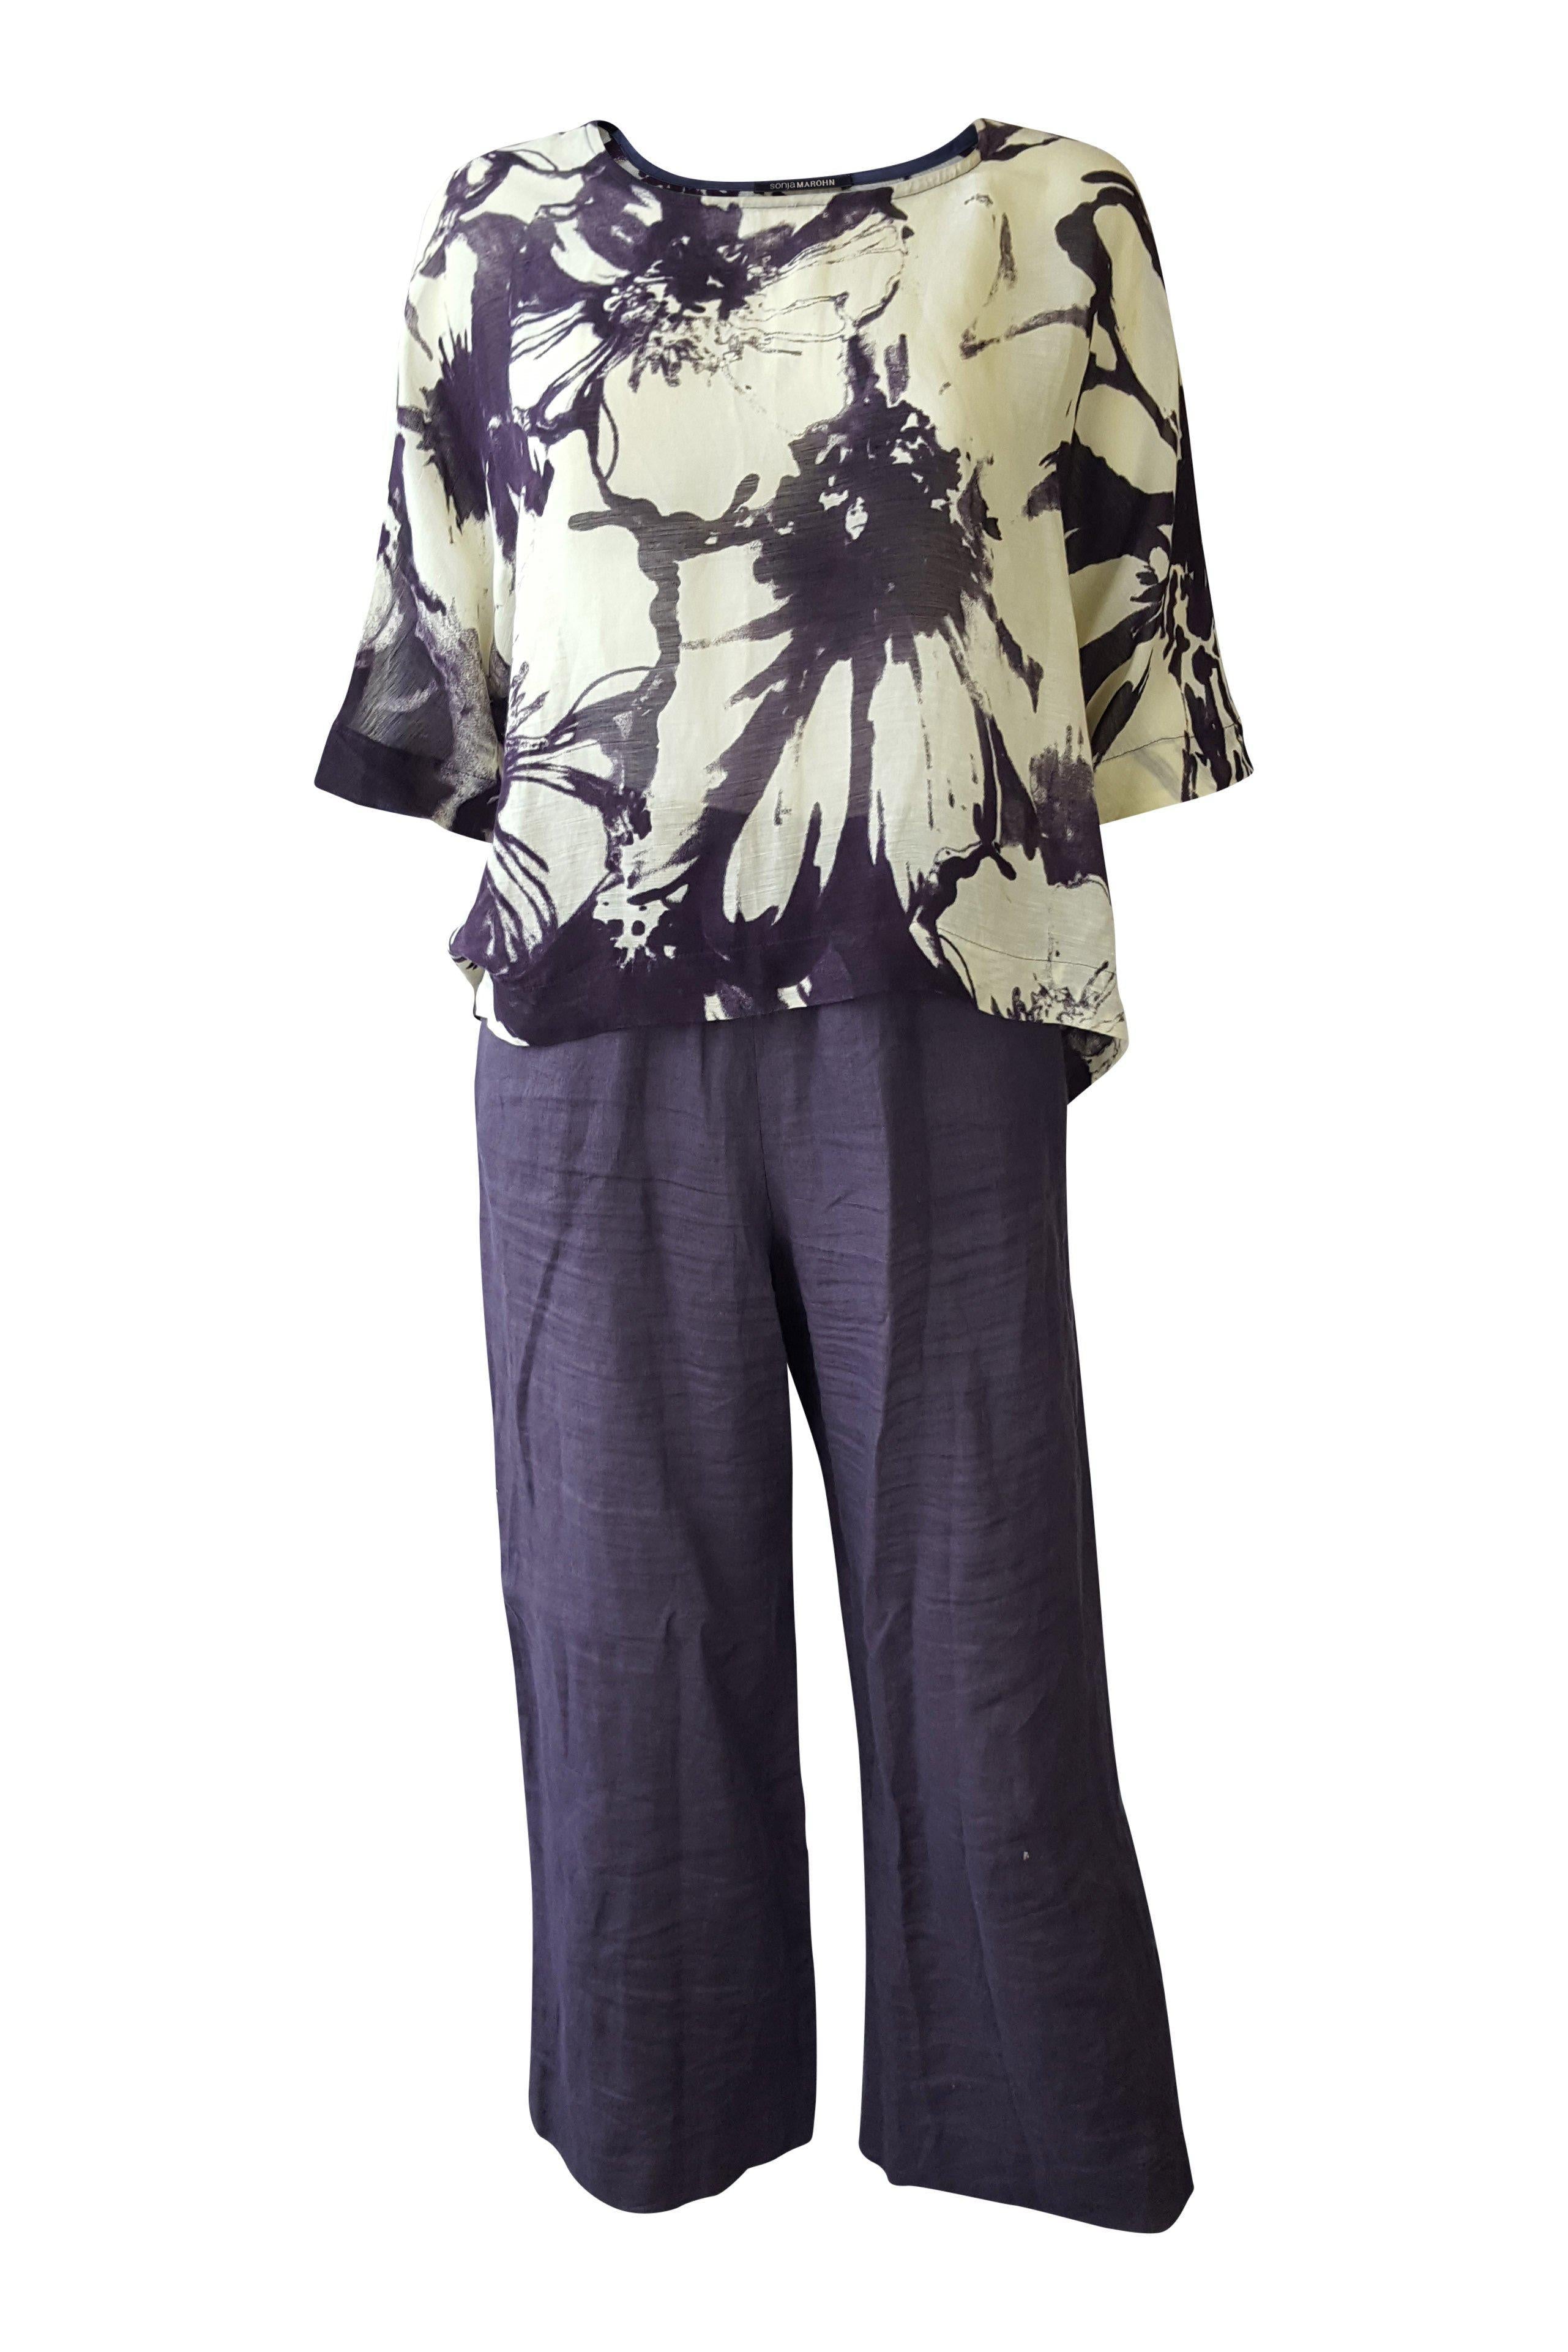 SONJA MAROHN Cotton Blend Purple Cream Top Trousers Set (10)-Sonja Marohn-The Freperie